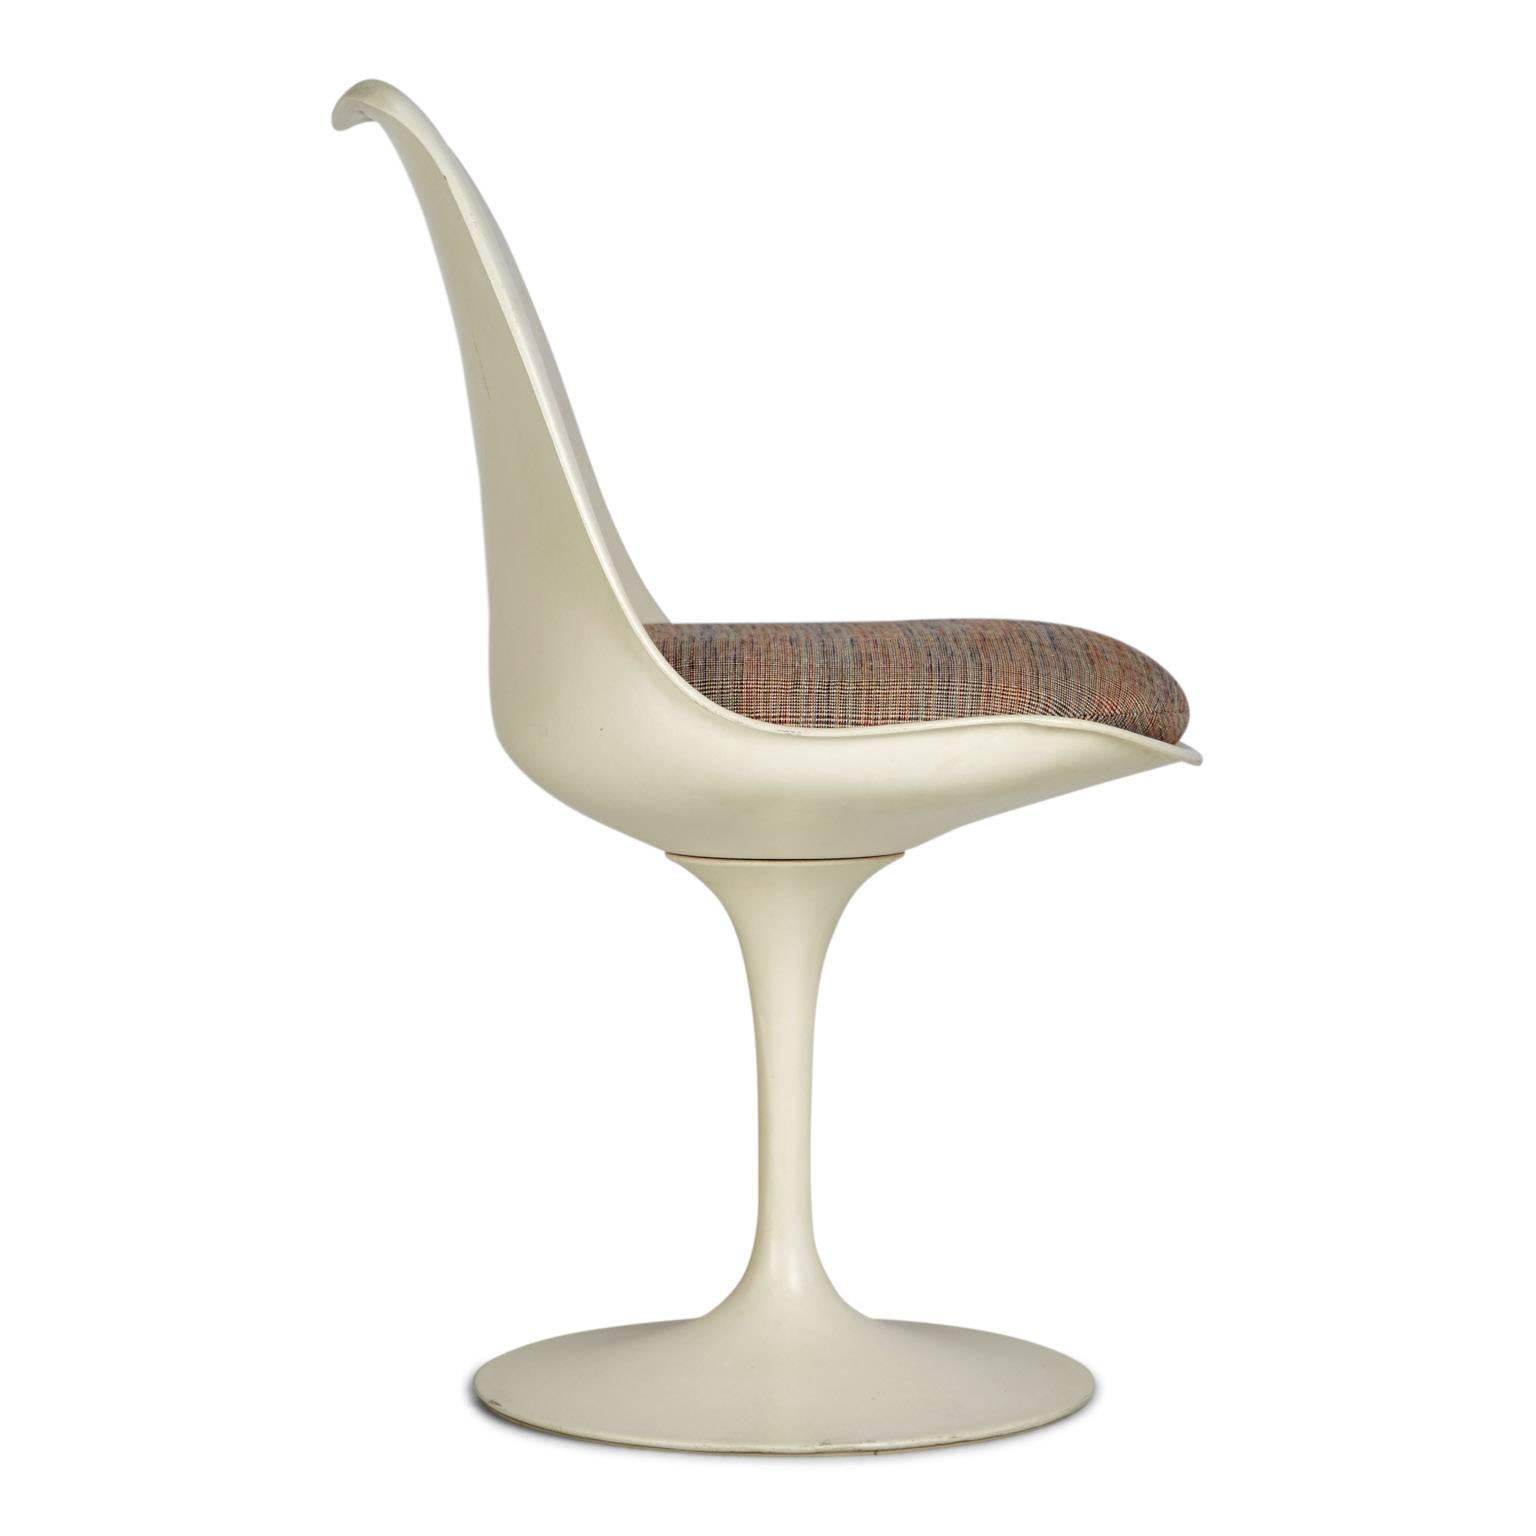 Late 20th Century Eero Saarinen His and Hers Tulip Chairs for Knoll International, circa 1970